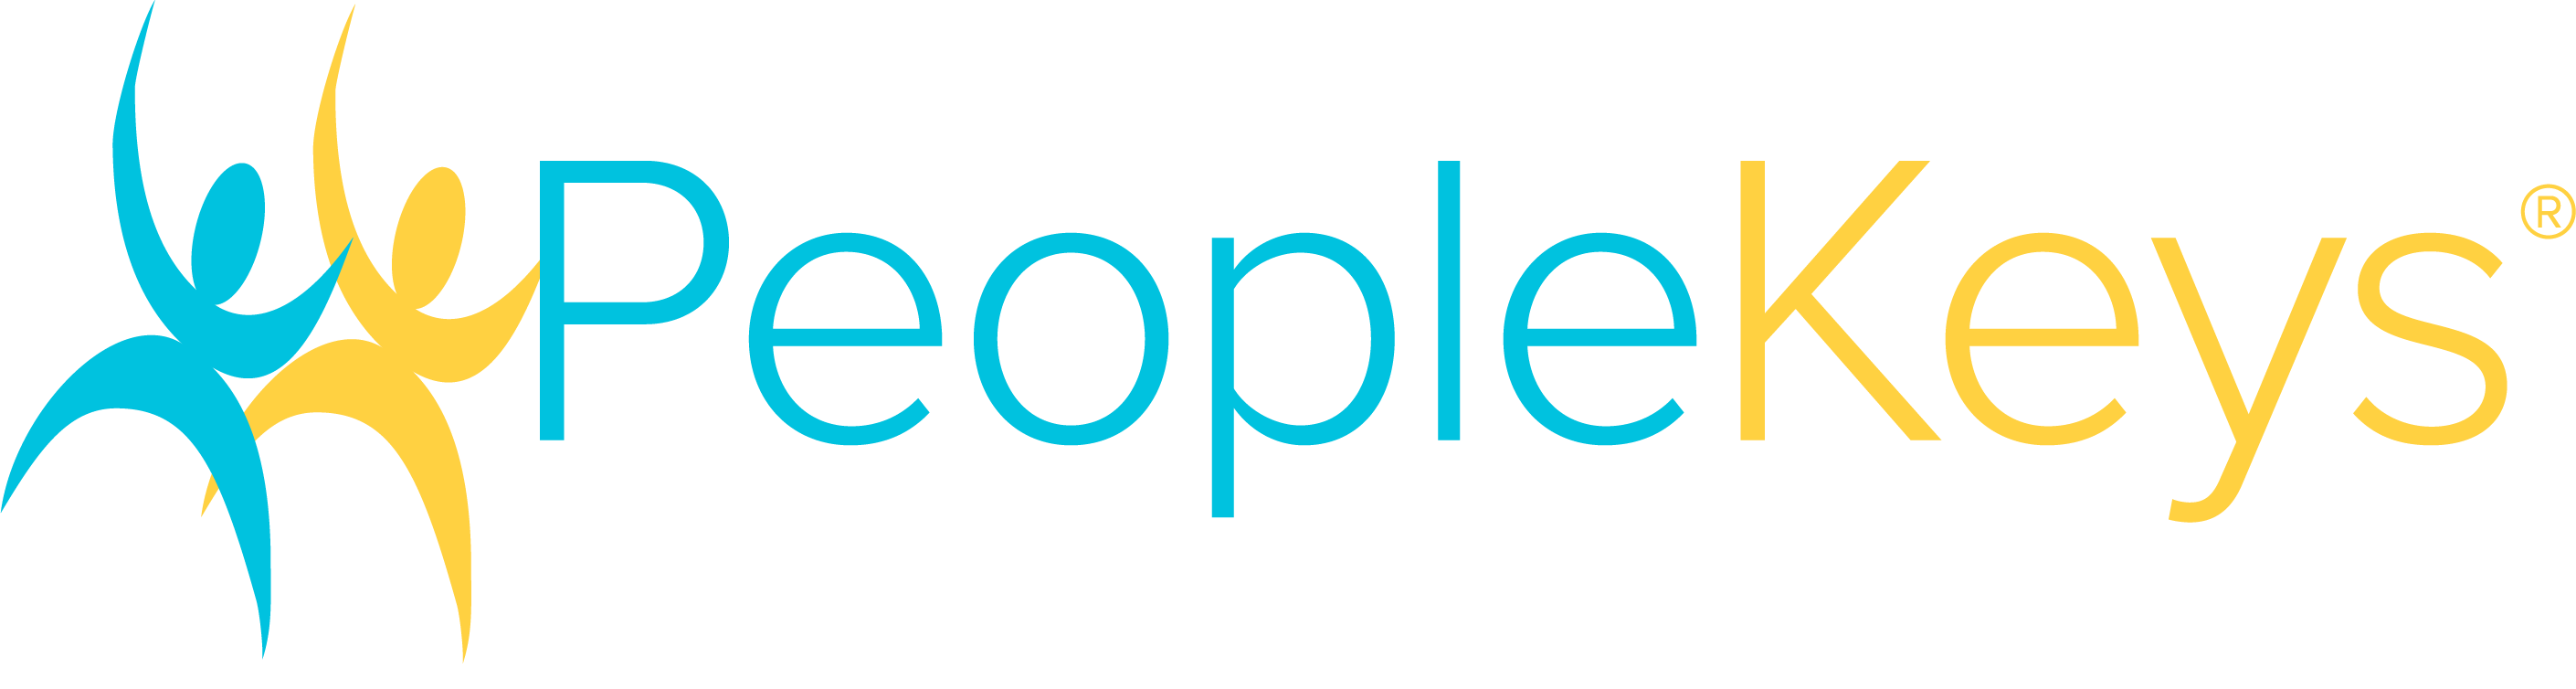 PeopleKeys-Official-DISC-Provider